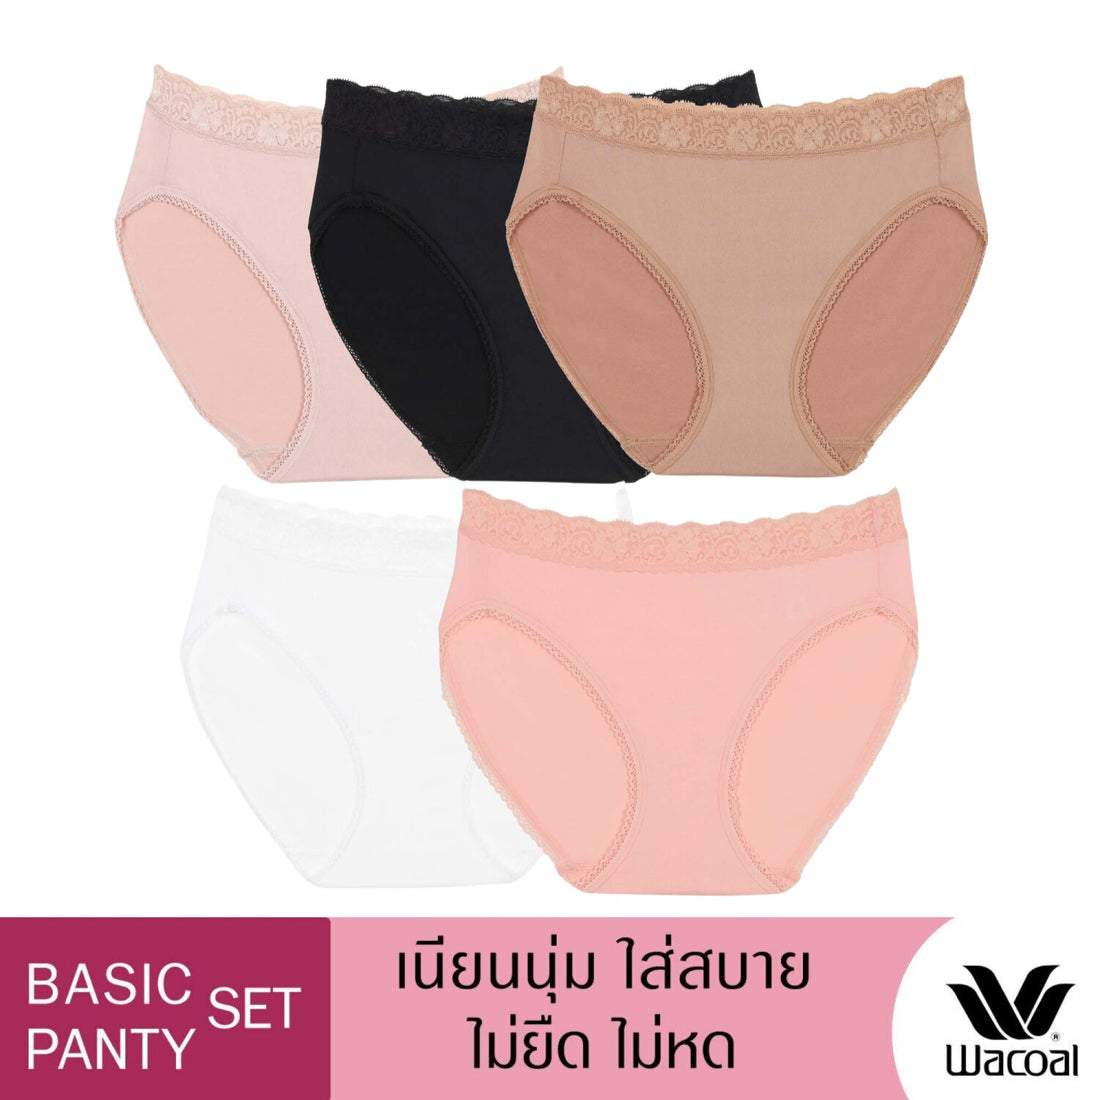 Wacoal Panty – Thai Wacoal Public Company Limited